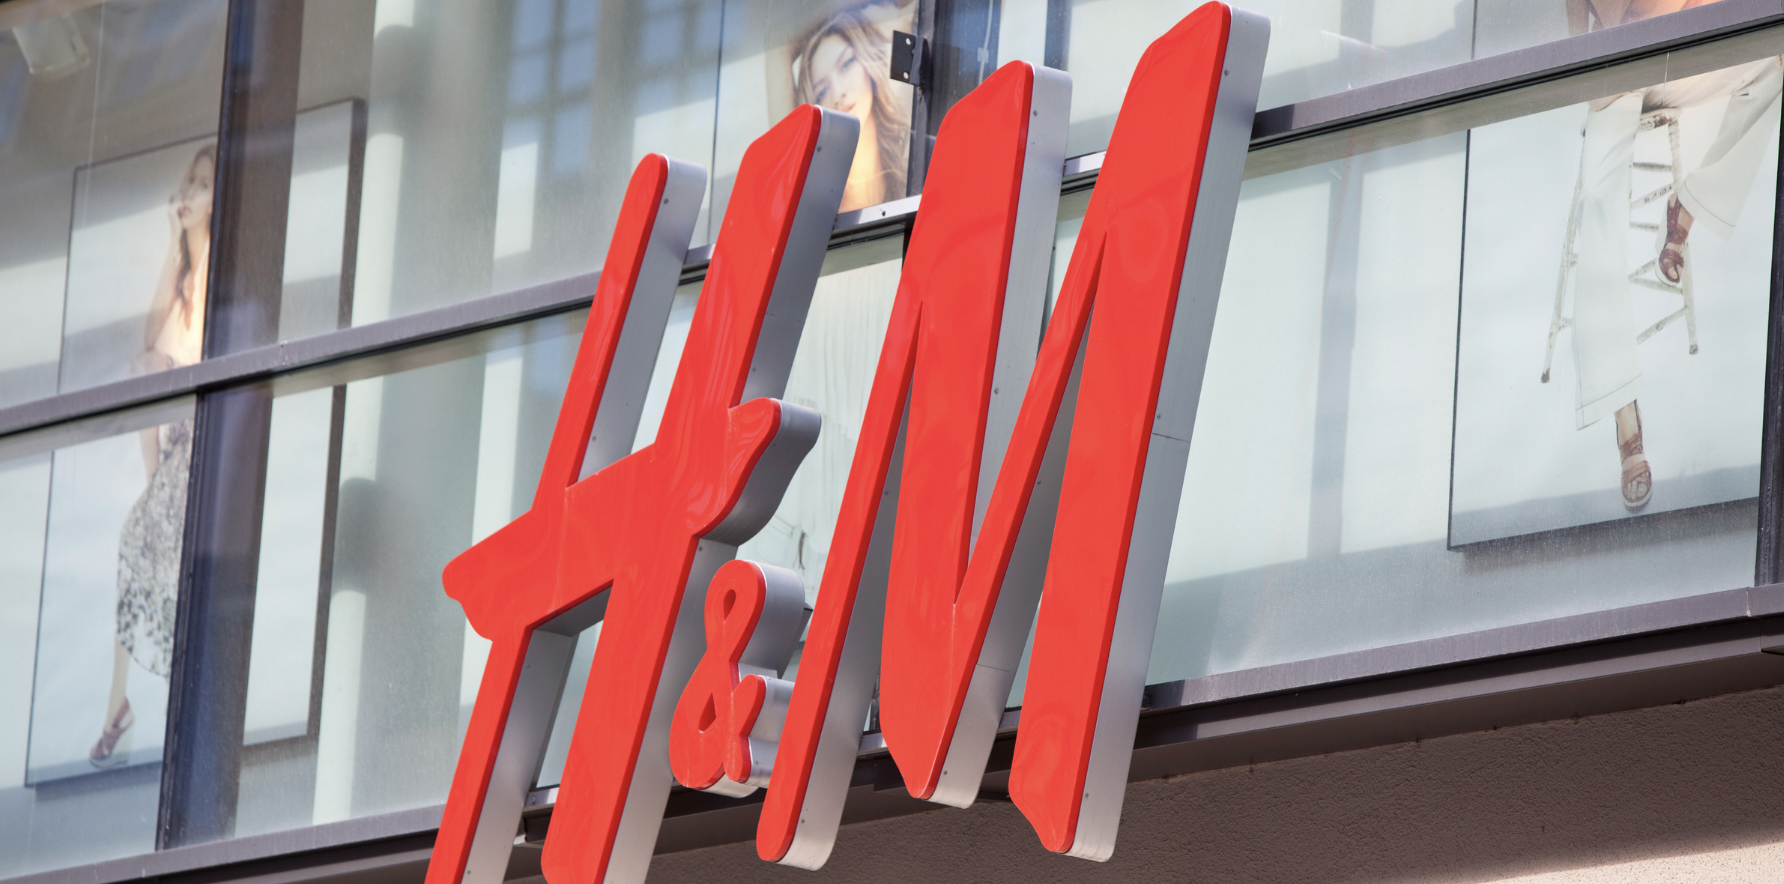 Small Biz awarded $117K in damages for Copyright Infringement Lawsuit against H&M